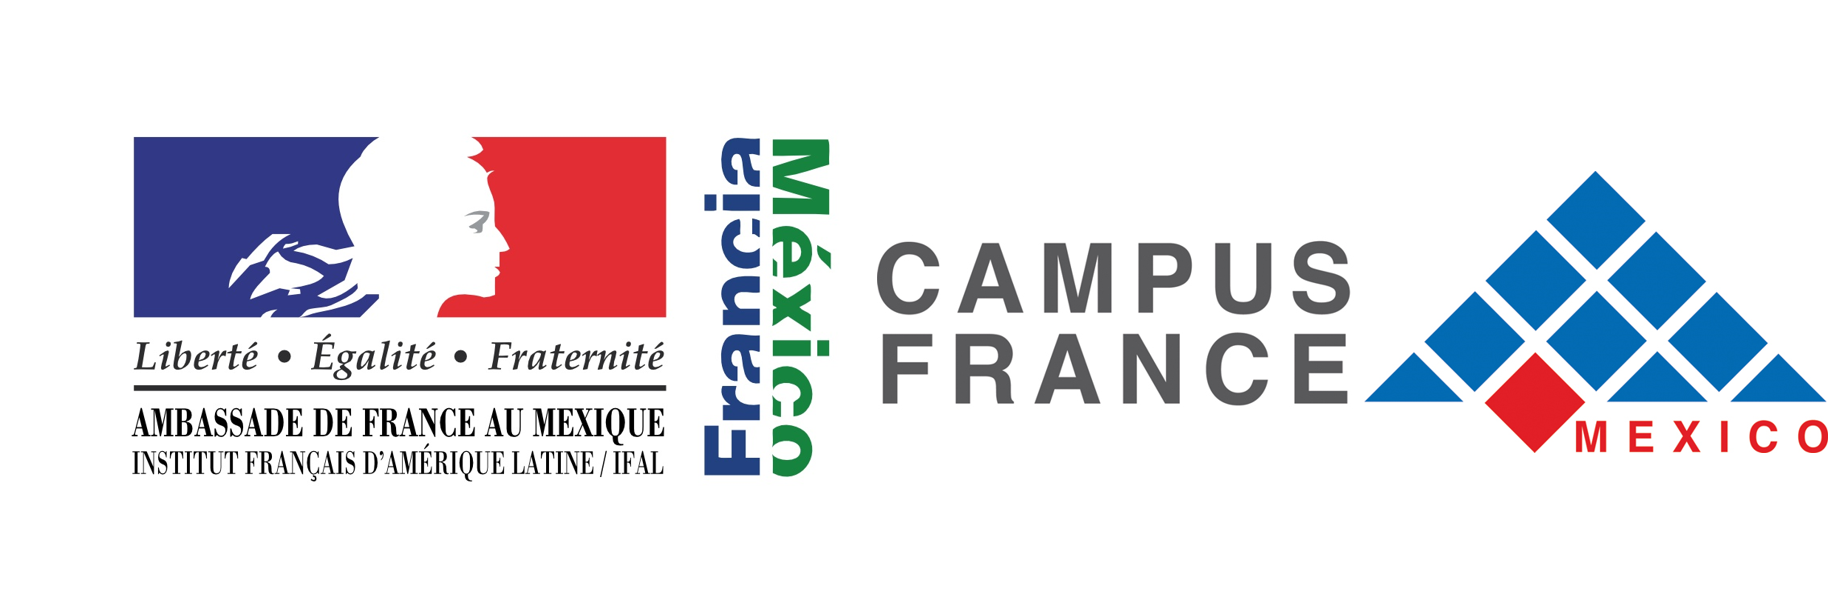 logo_Embajada de Francia en México - Campus France